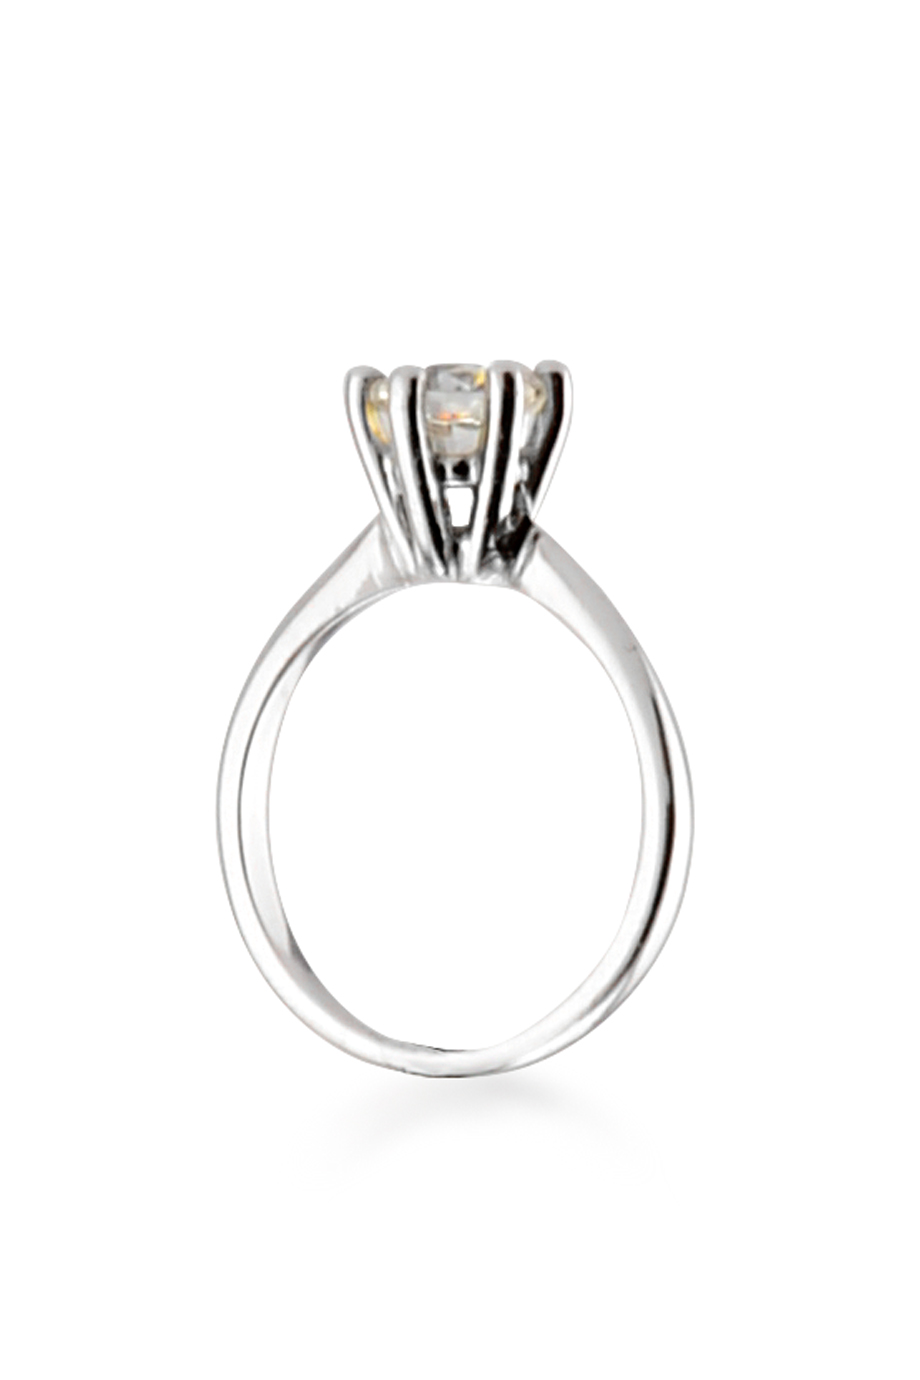 Nhẫn Bạc 925 Silver 925 Single Crystal Halo Ring 2.03gr